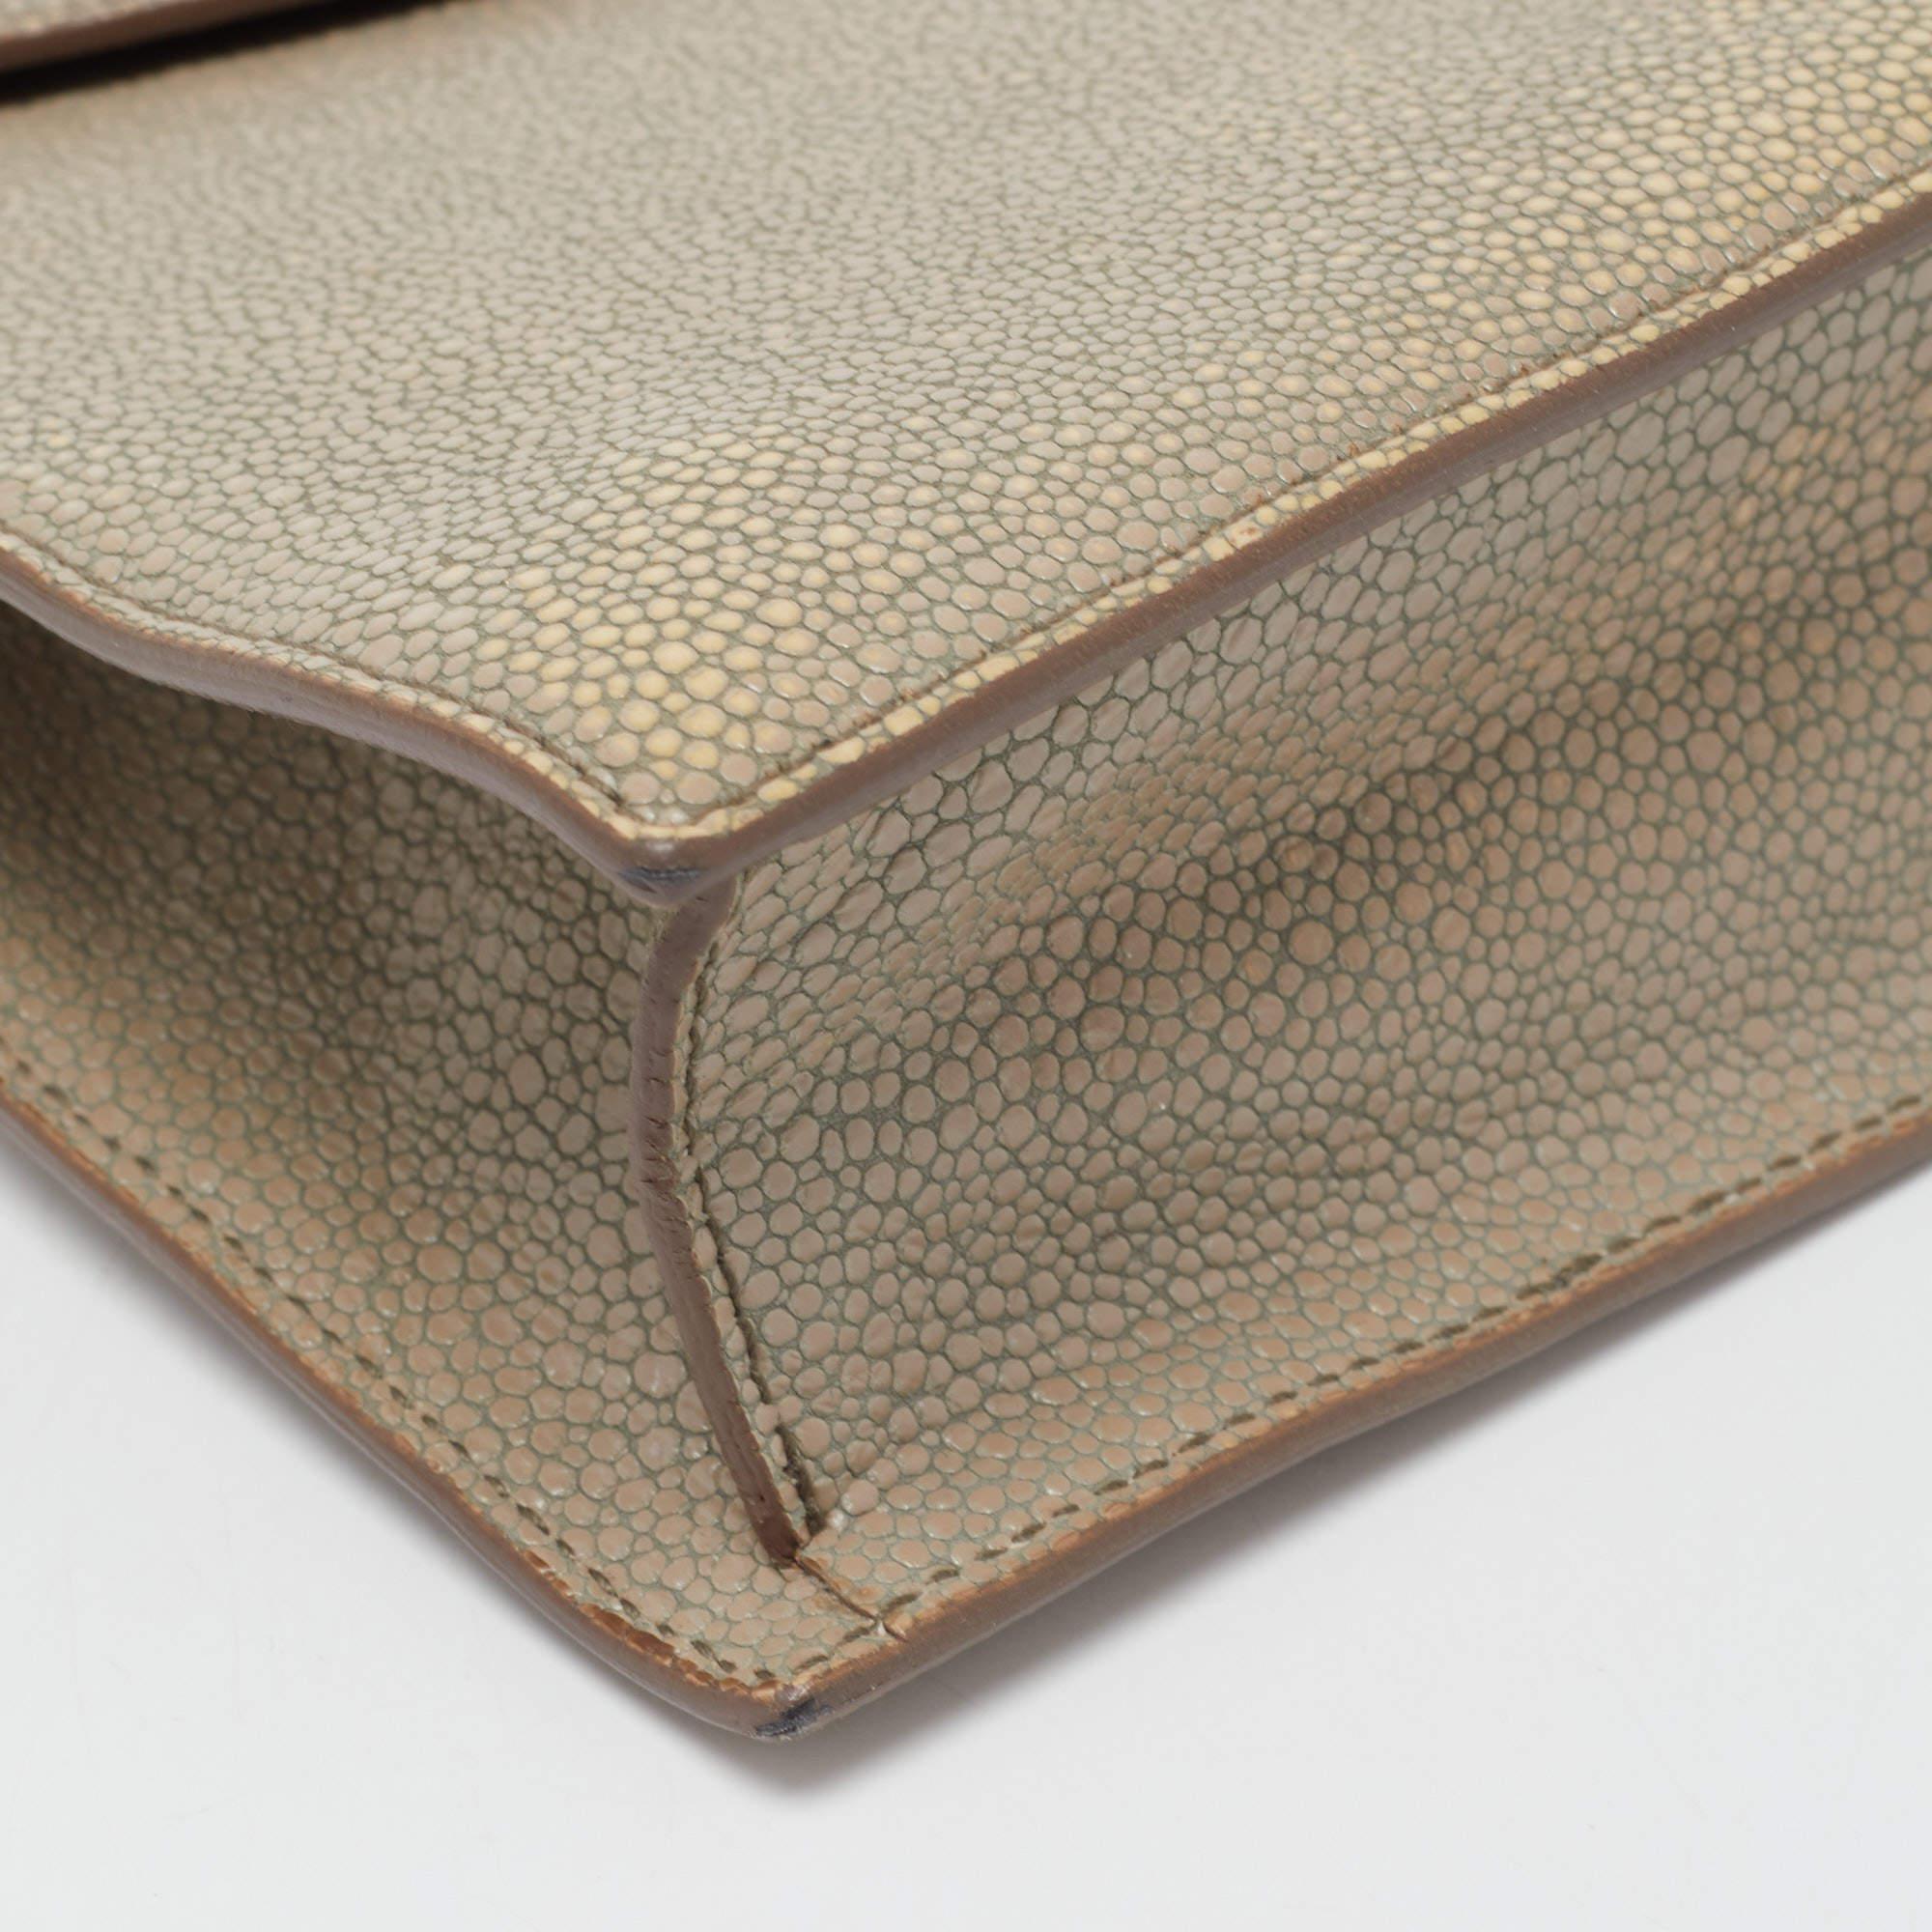 Yves Saint Laurent Khaki Stingray Embossed Leather Envelope Clutch 1